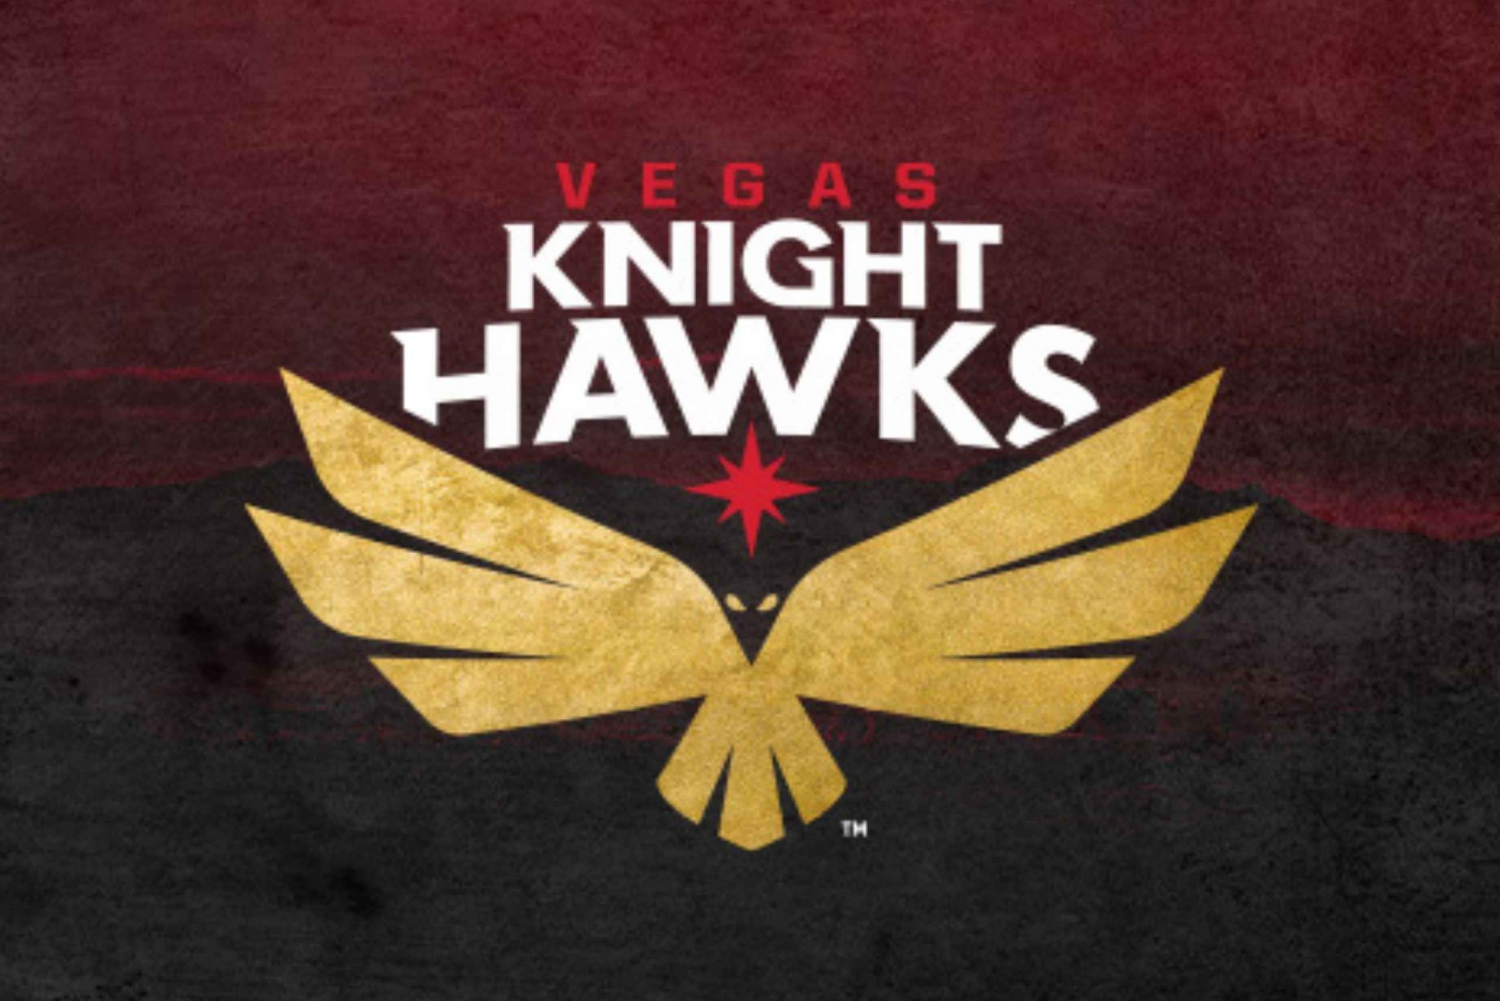 Vegas Knight Hawks - Indoor Football League